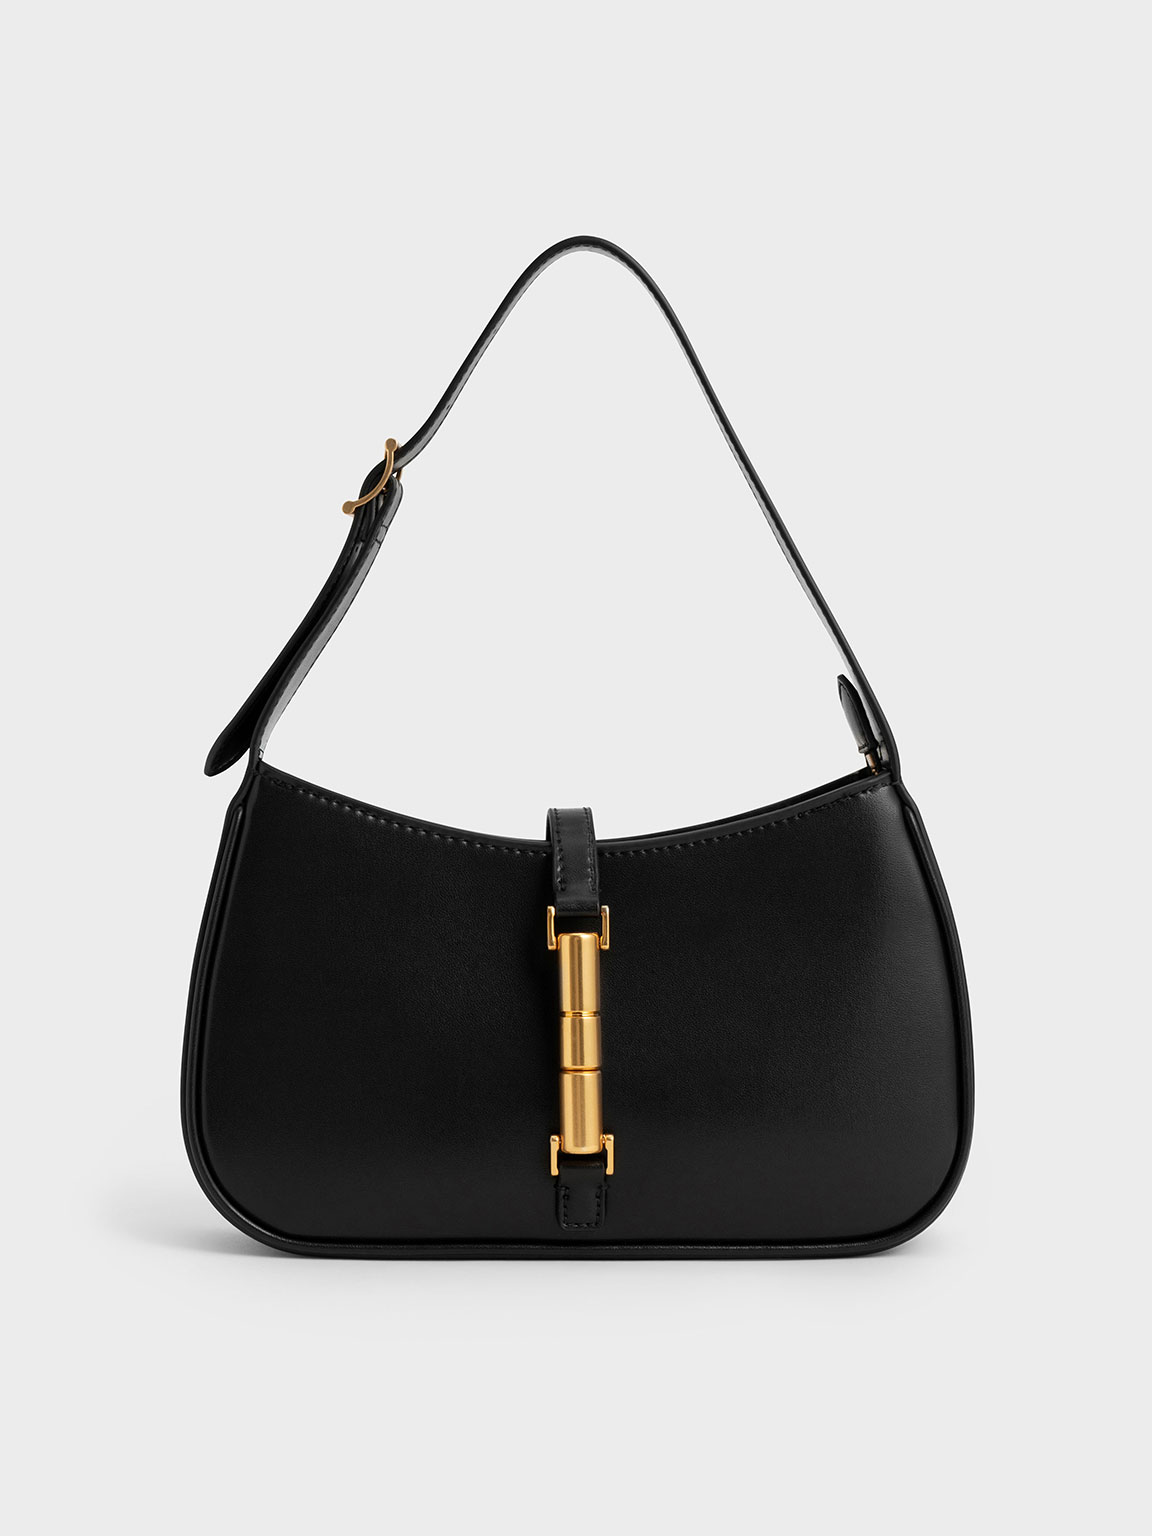 The C Scacchi - Black and White leather Handbag